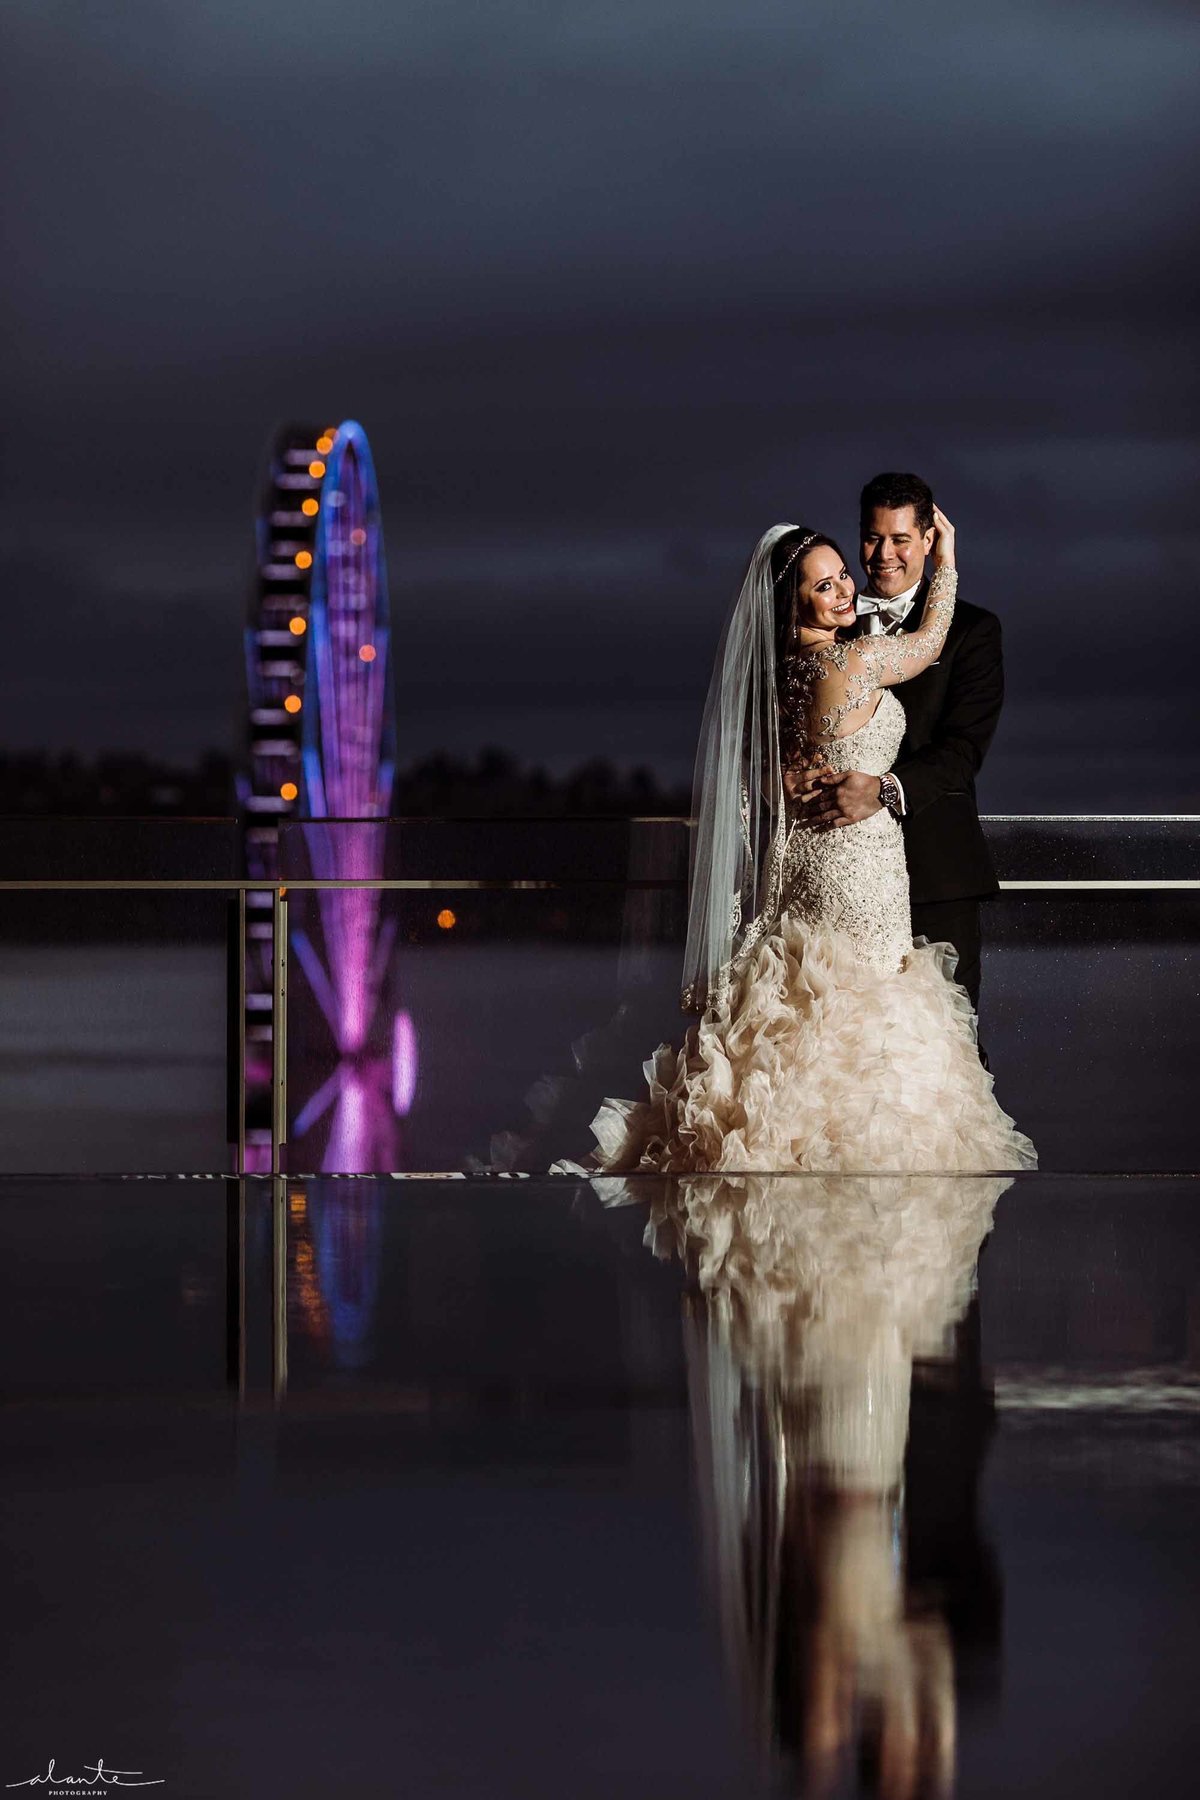 Stunning Four Seasons ballroom wedding designed by Flora Nova Design.